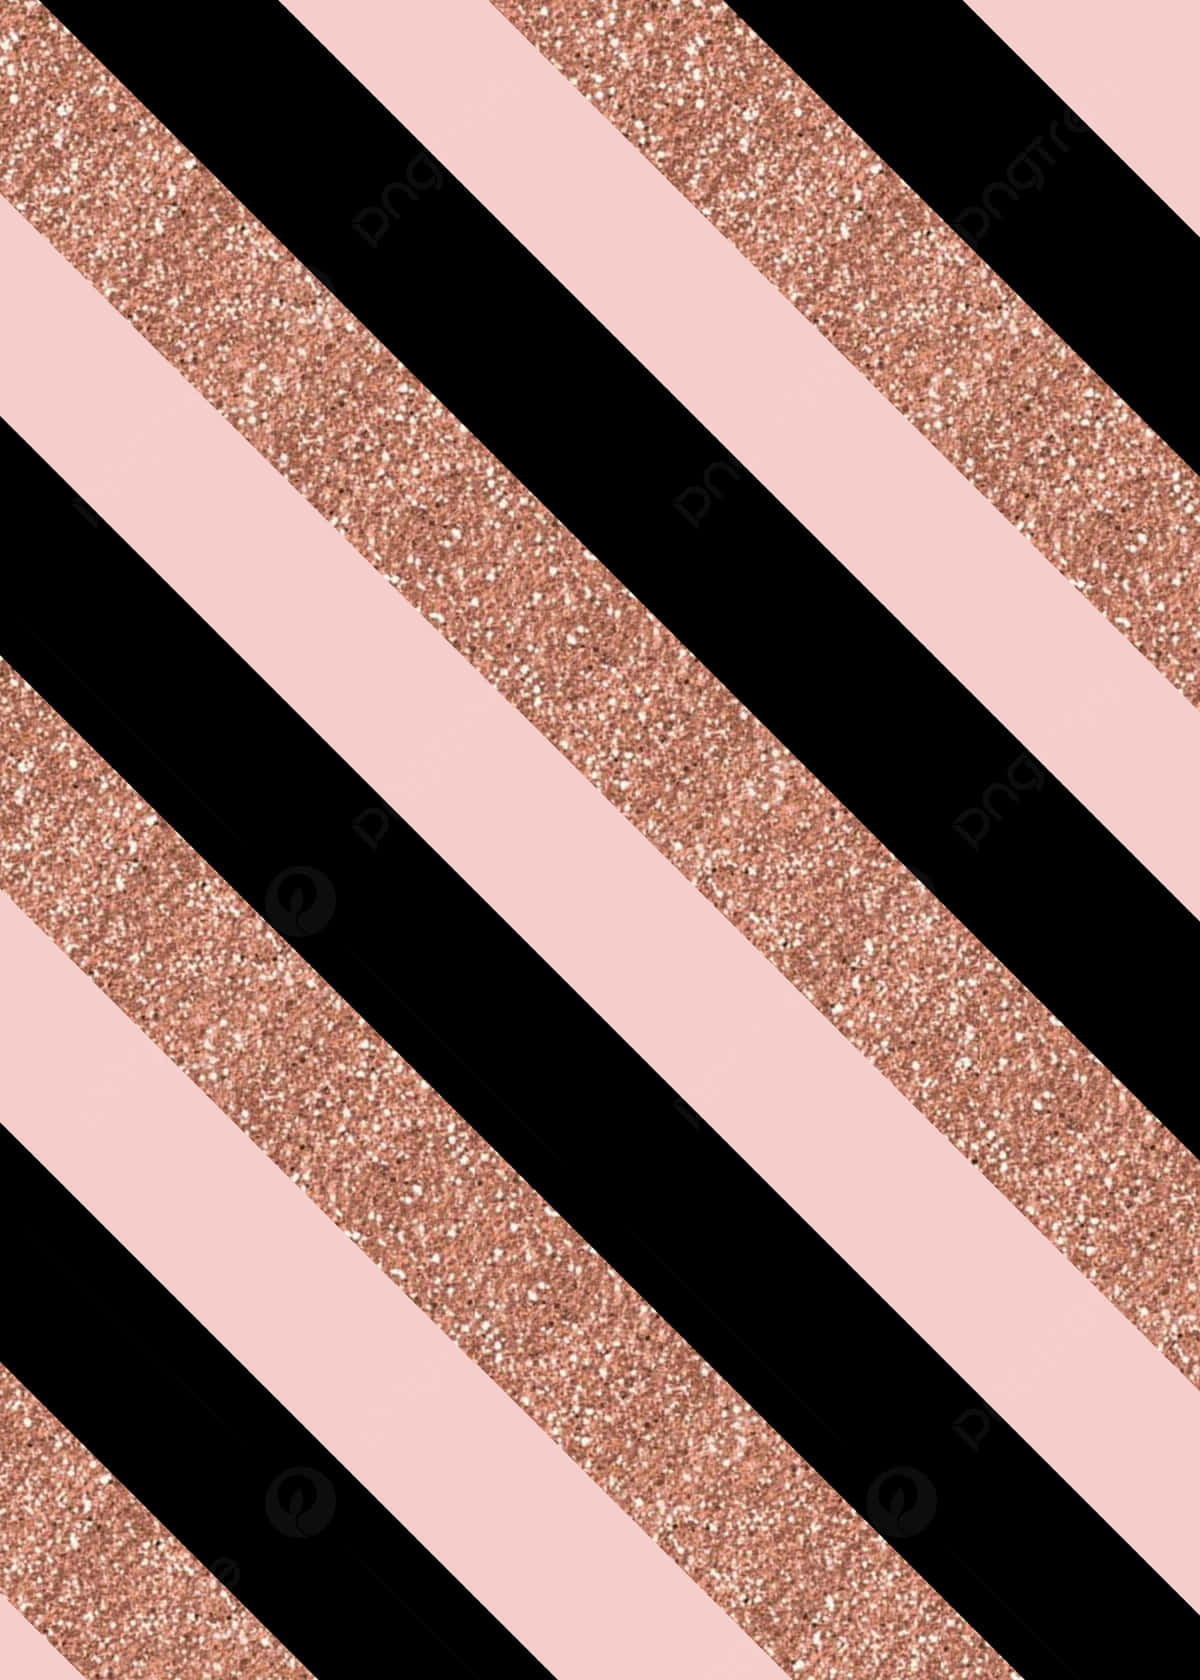 A Pink And Black Glitter Striped Pattern